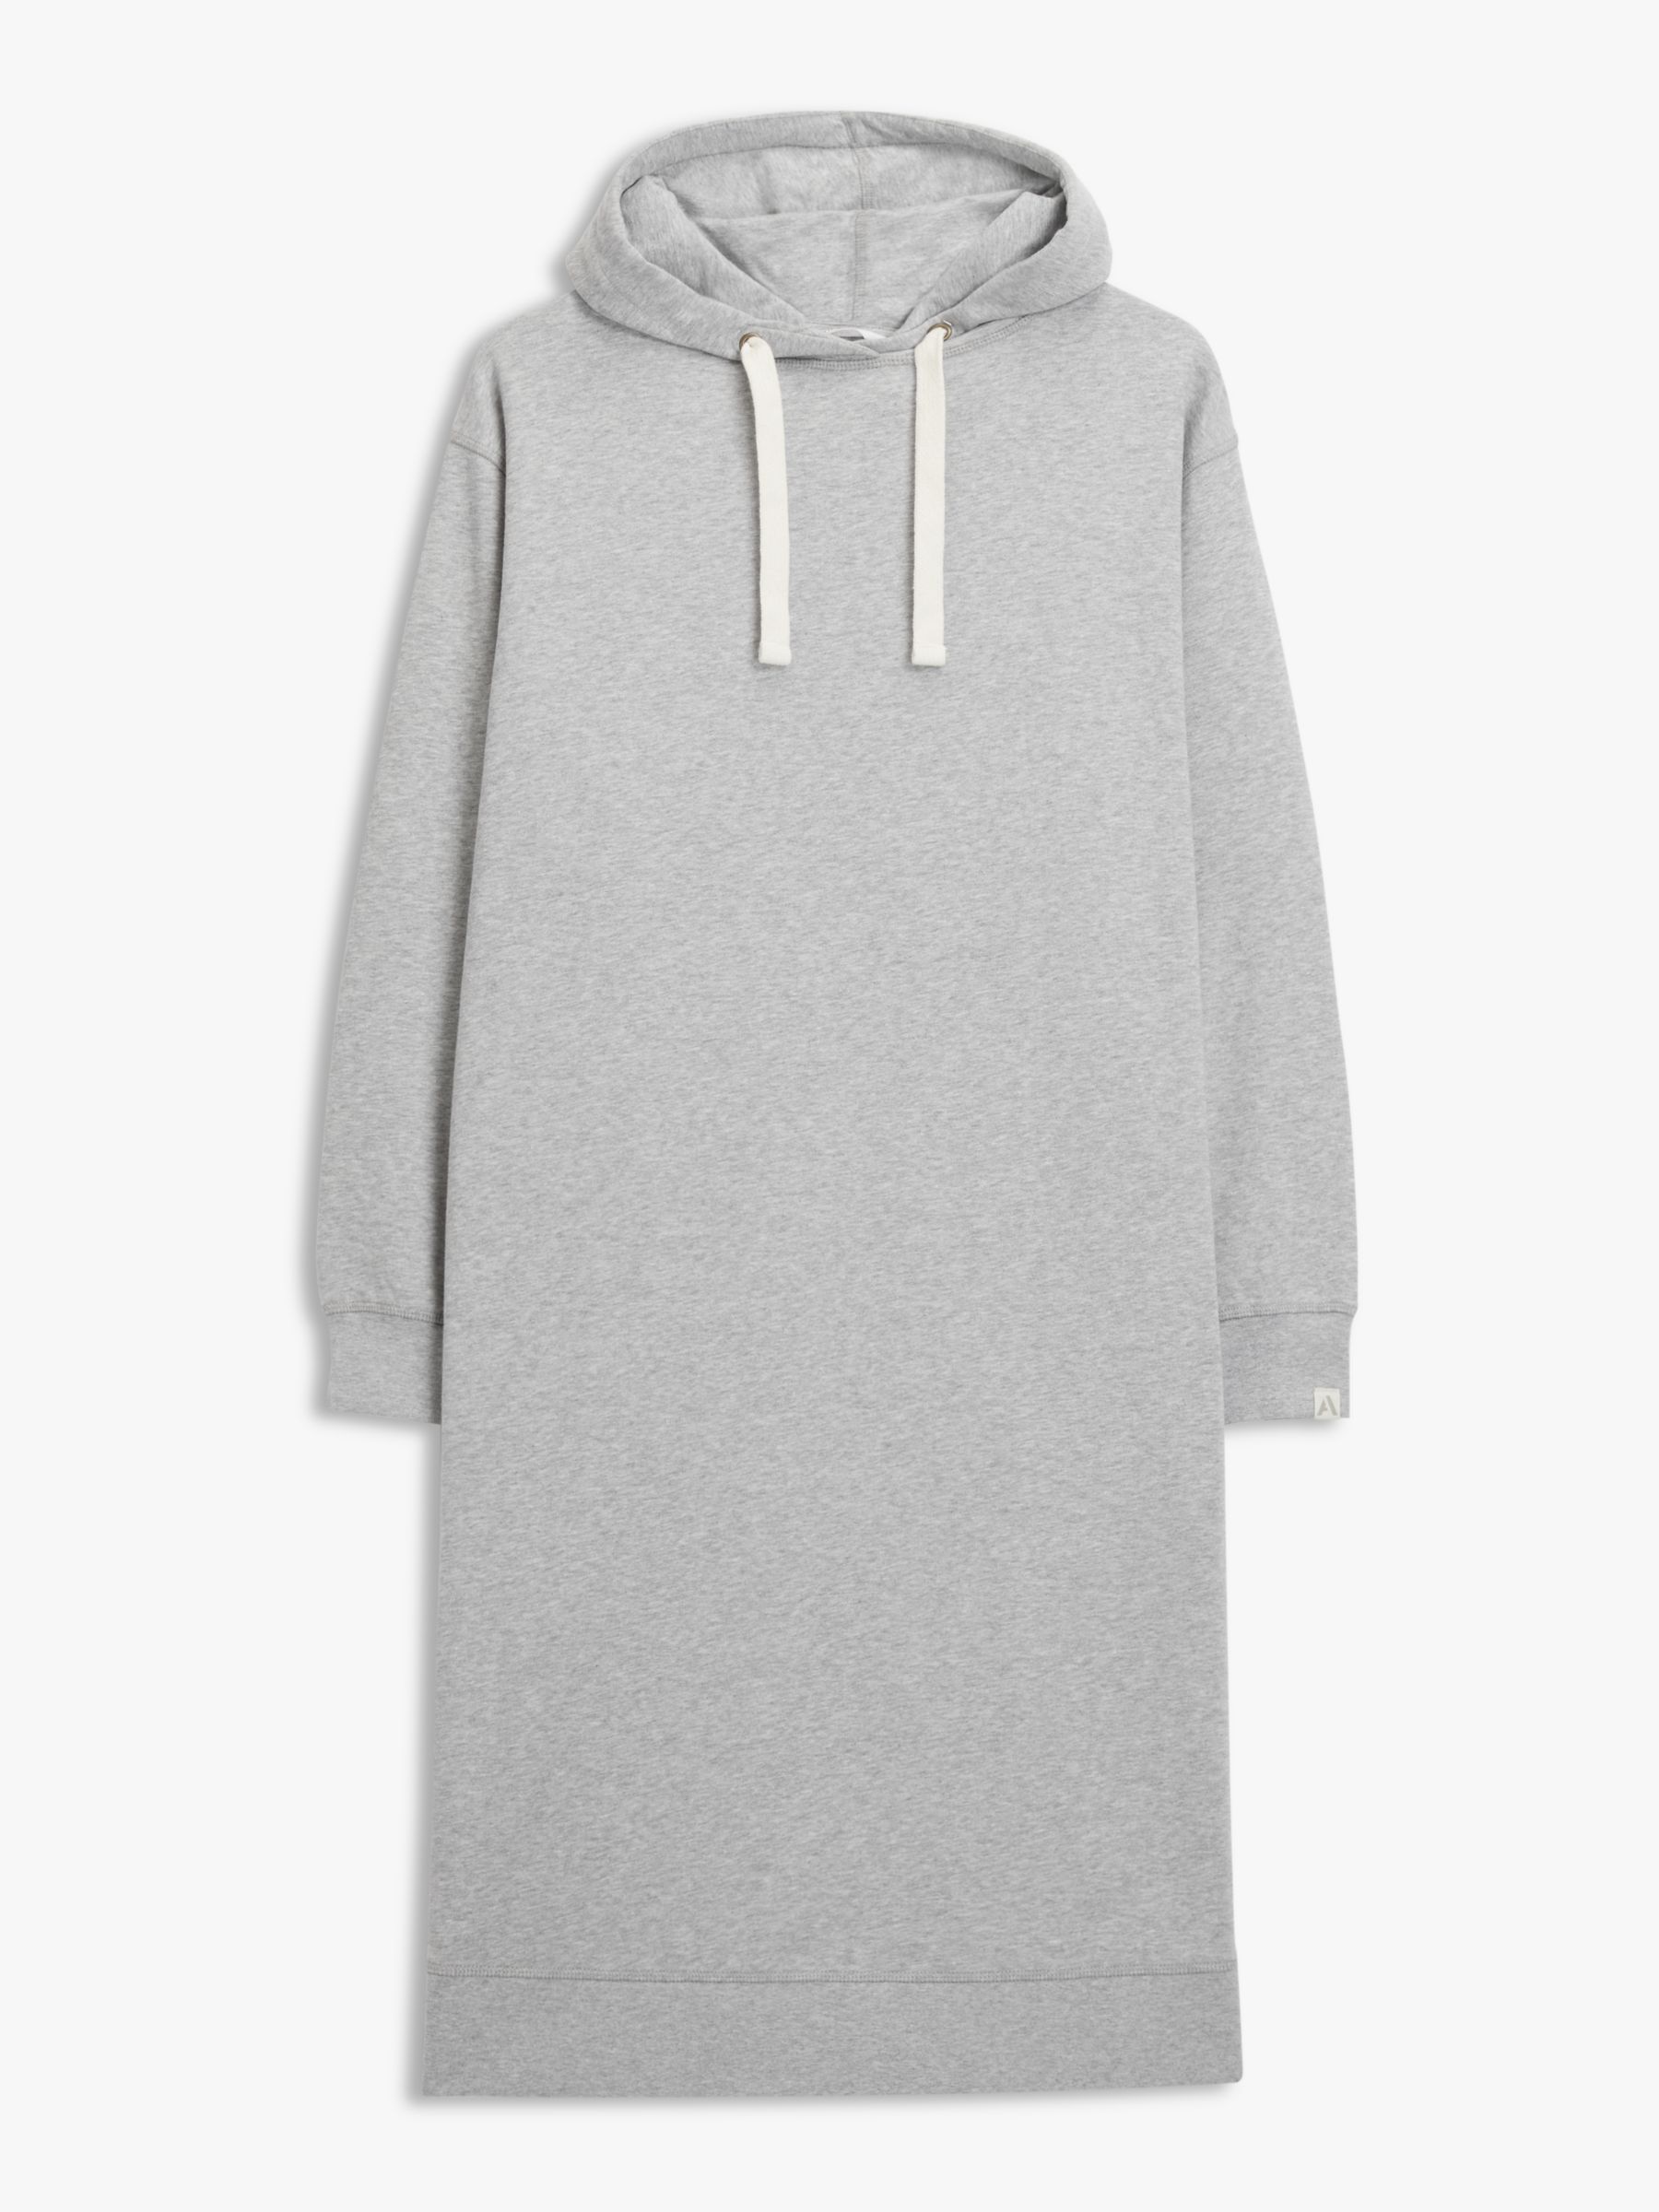 ANYDAY John Lewis & Partners Hoodie Sweater Dress, Grey